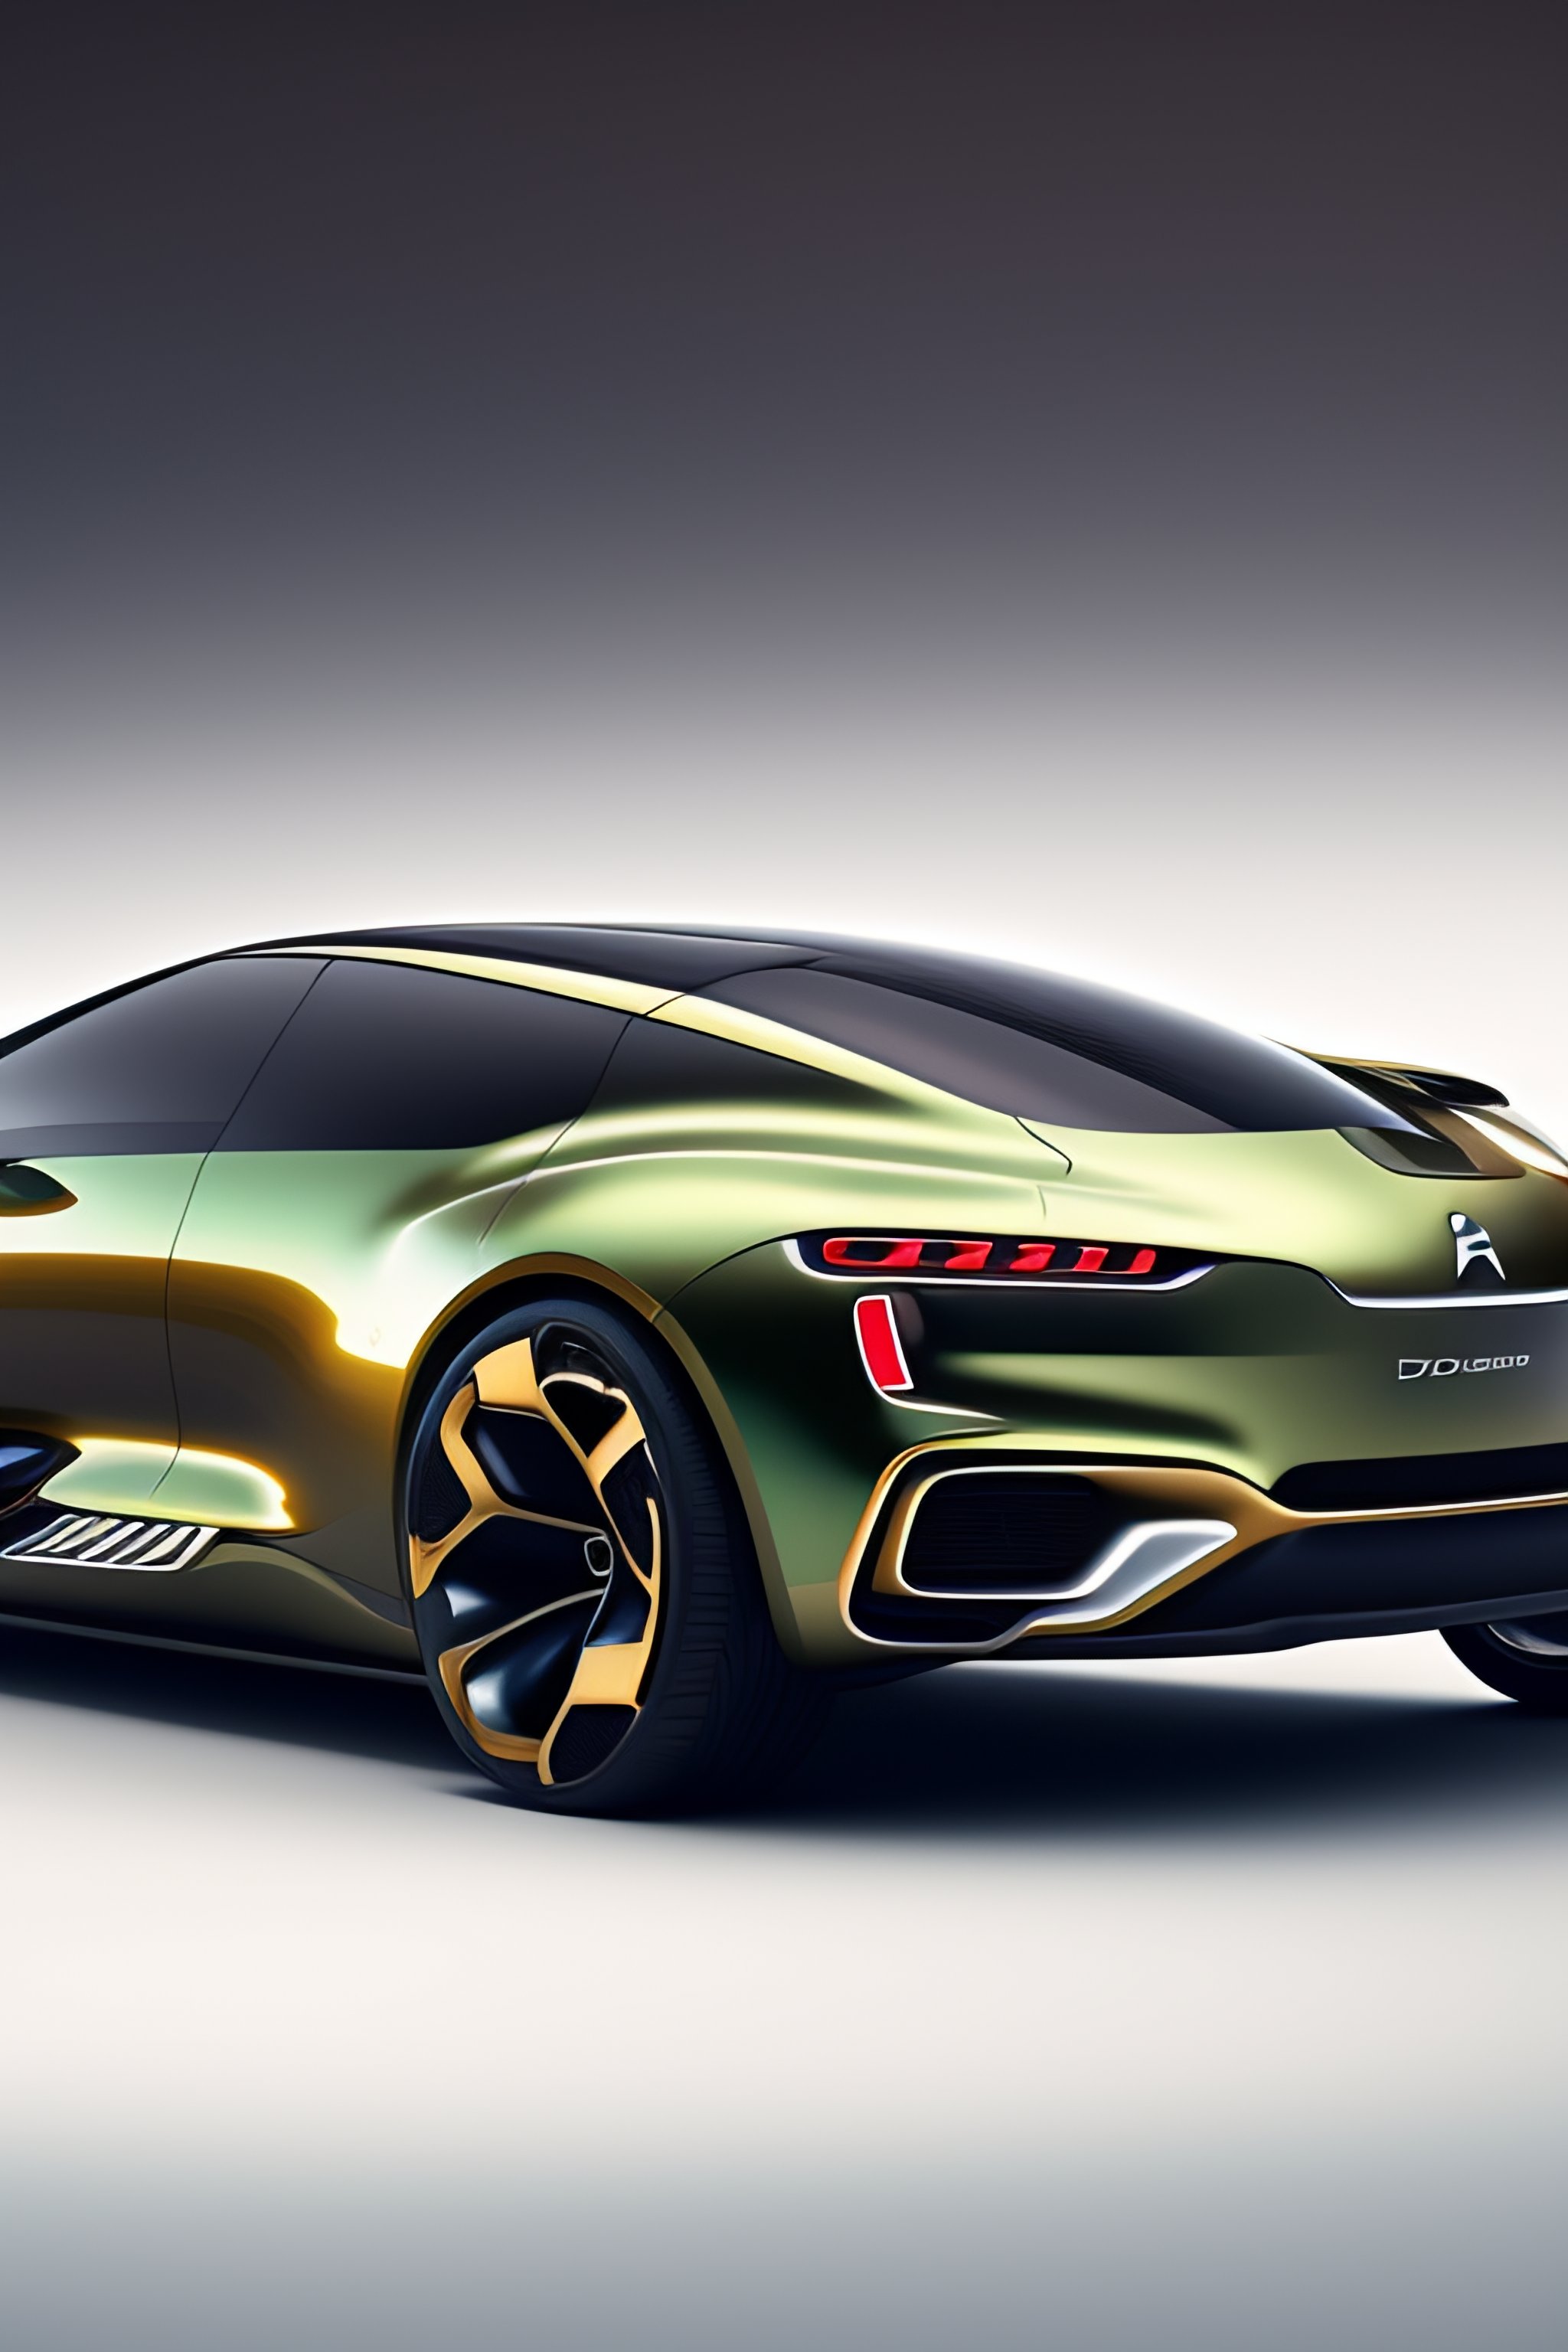 Lexica - Citroen ds high detail futuristic concept car